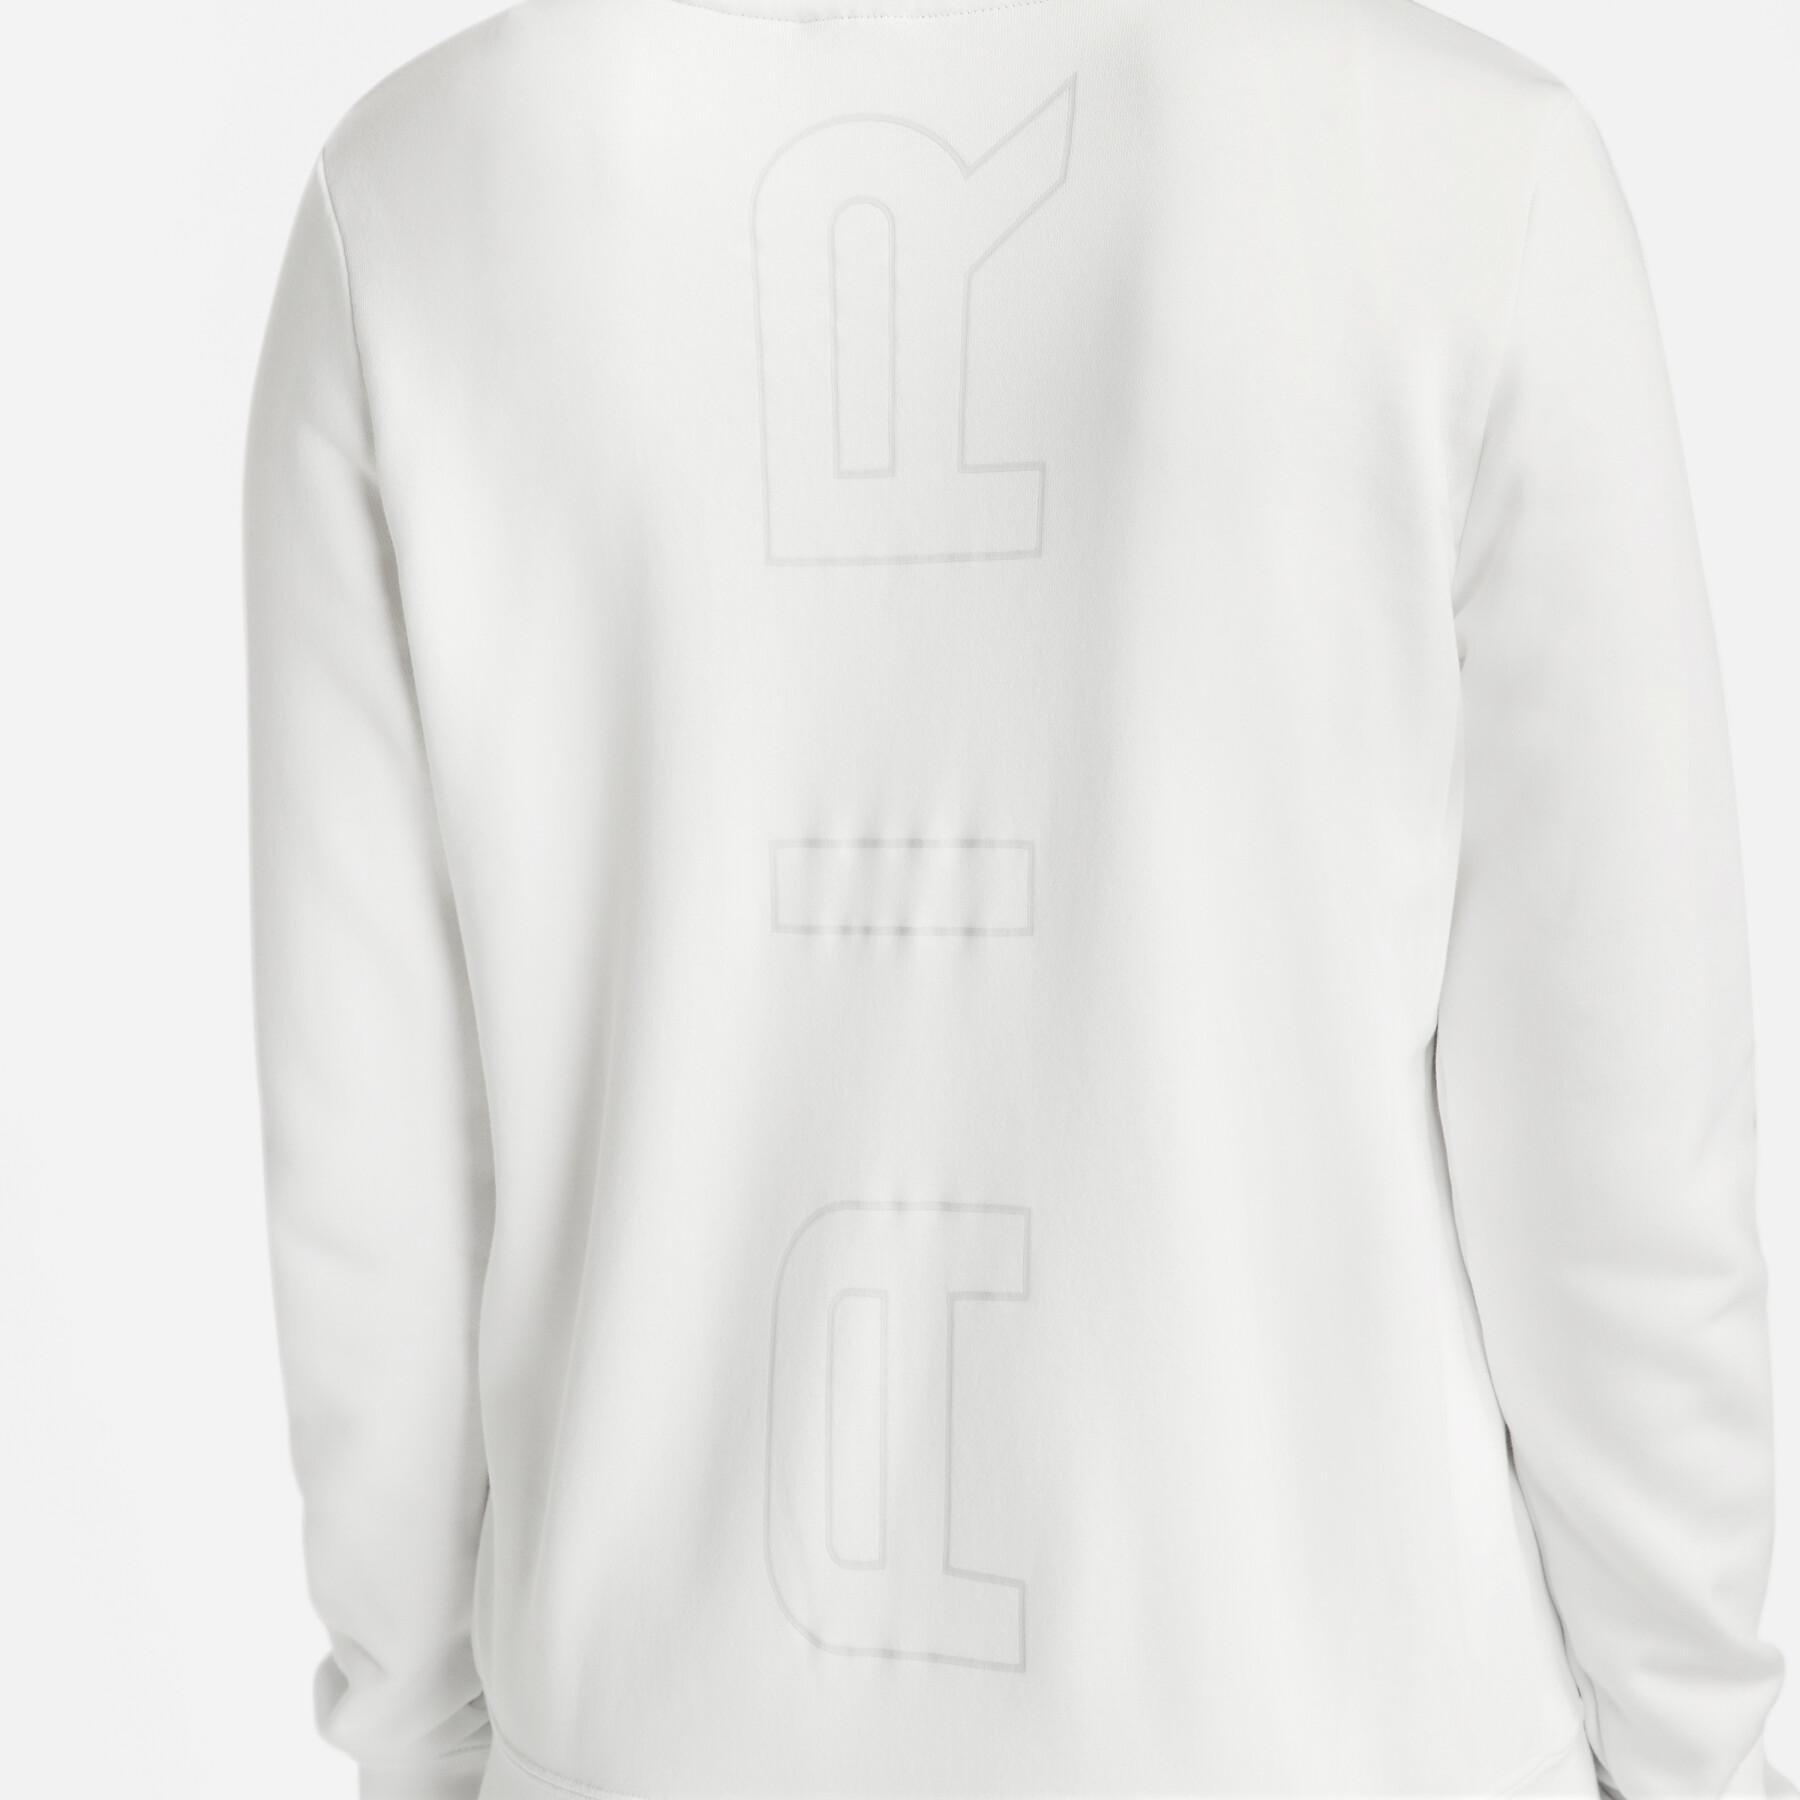 Sweatshirt à capuche full zip femme Nike Air Fleece